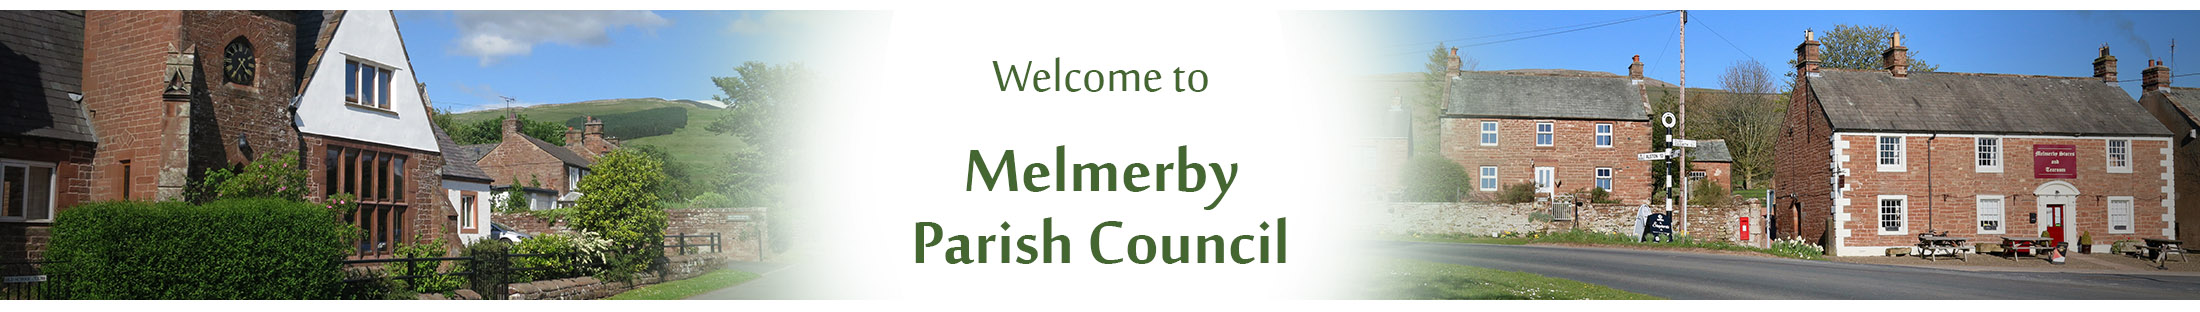 Header Image for Melmerby Parish Council